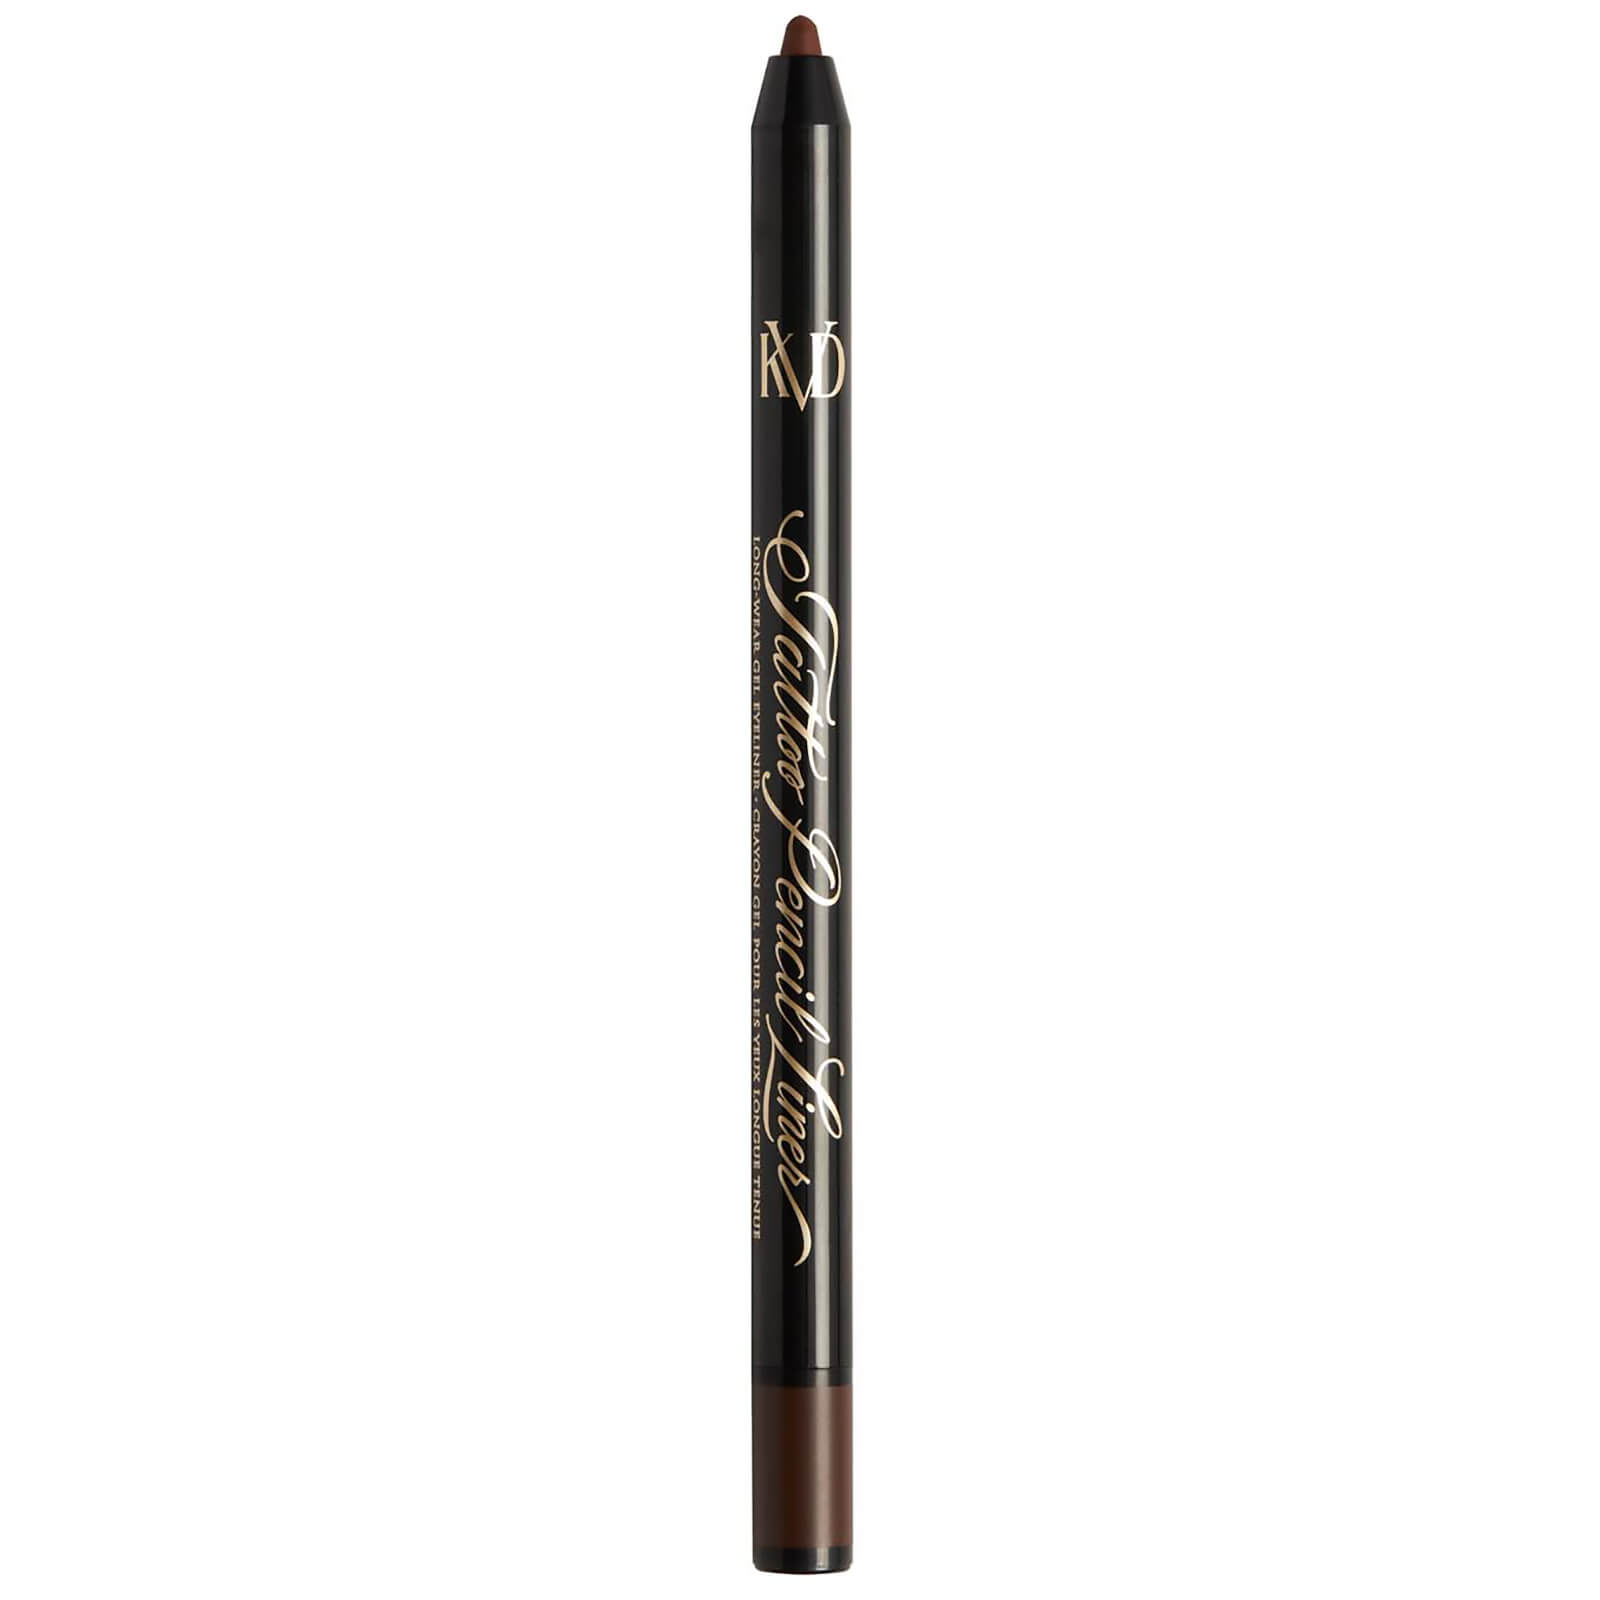 KVD Beauty Tattoo Pencil Liner Long-Wear Gel Eyeliner 0.5g (Various Shades) - Axinite Brown 30